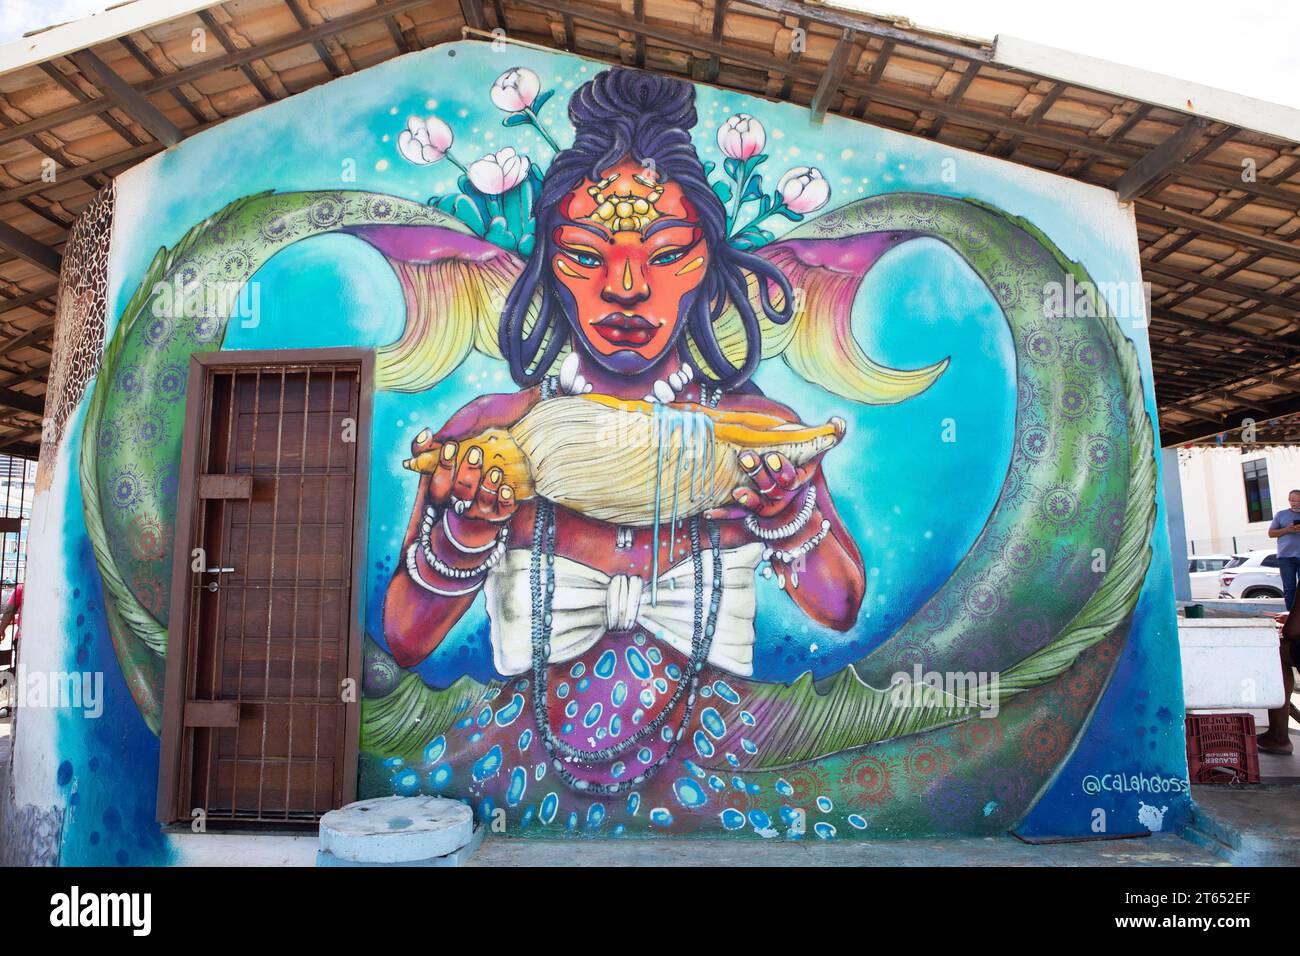 Peinture murale à la Casa do Peso dos Pescadores ou Maison de pesée des pêcheurs, zone de pêche Rio Vermelho, Salvador, État de Bahia, Brésil Banque D'Images